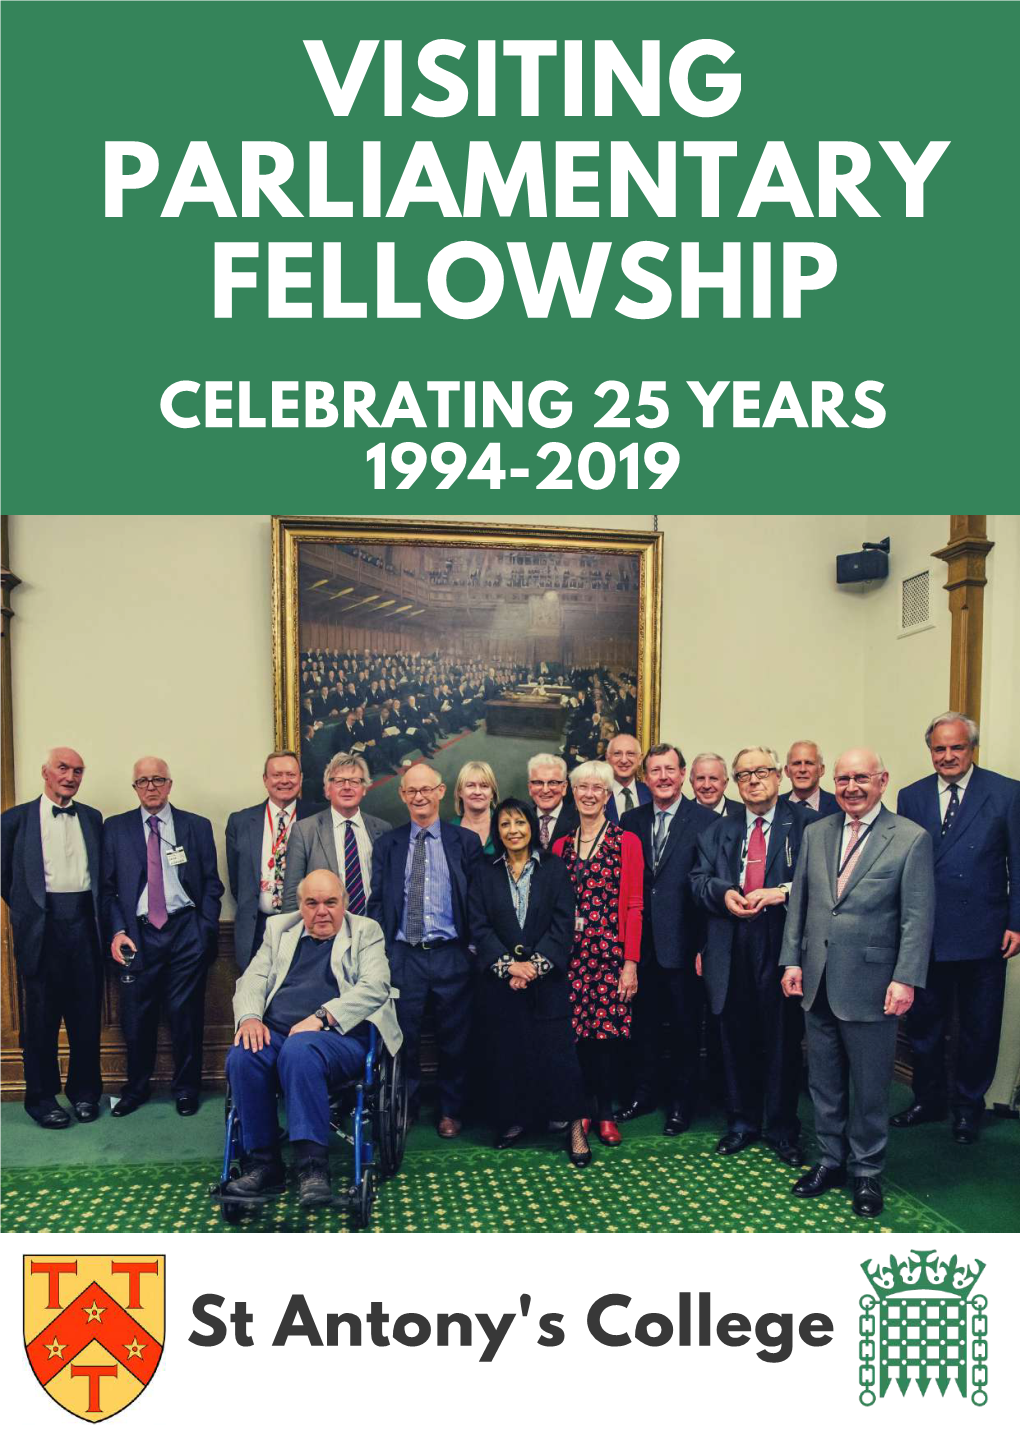 Visiting Parliamentary Fellowship Celebrating 25 Years 1994-2019